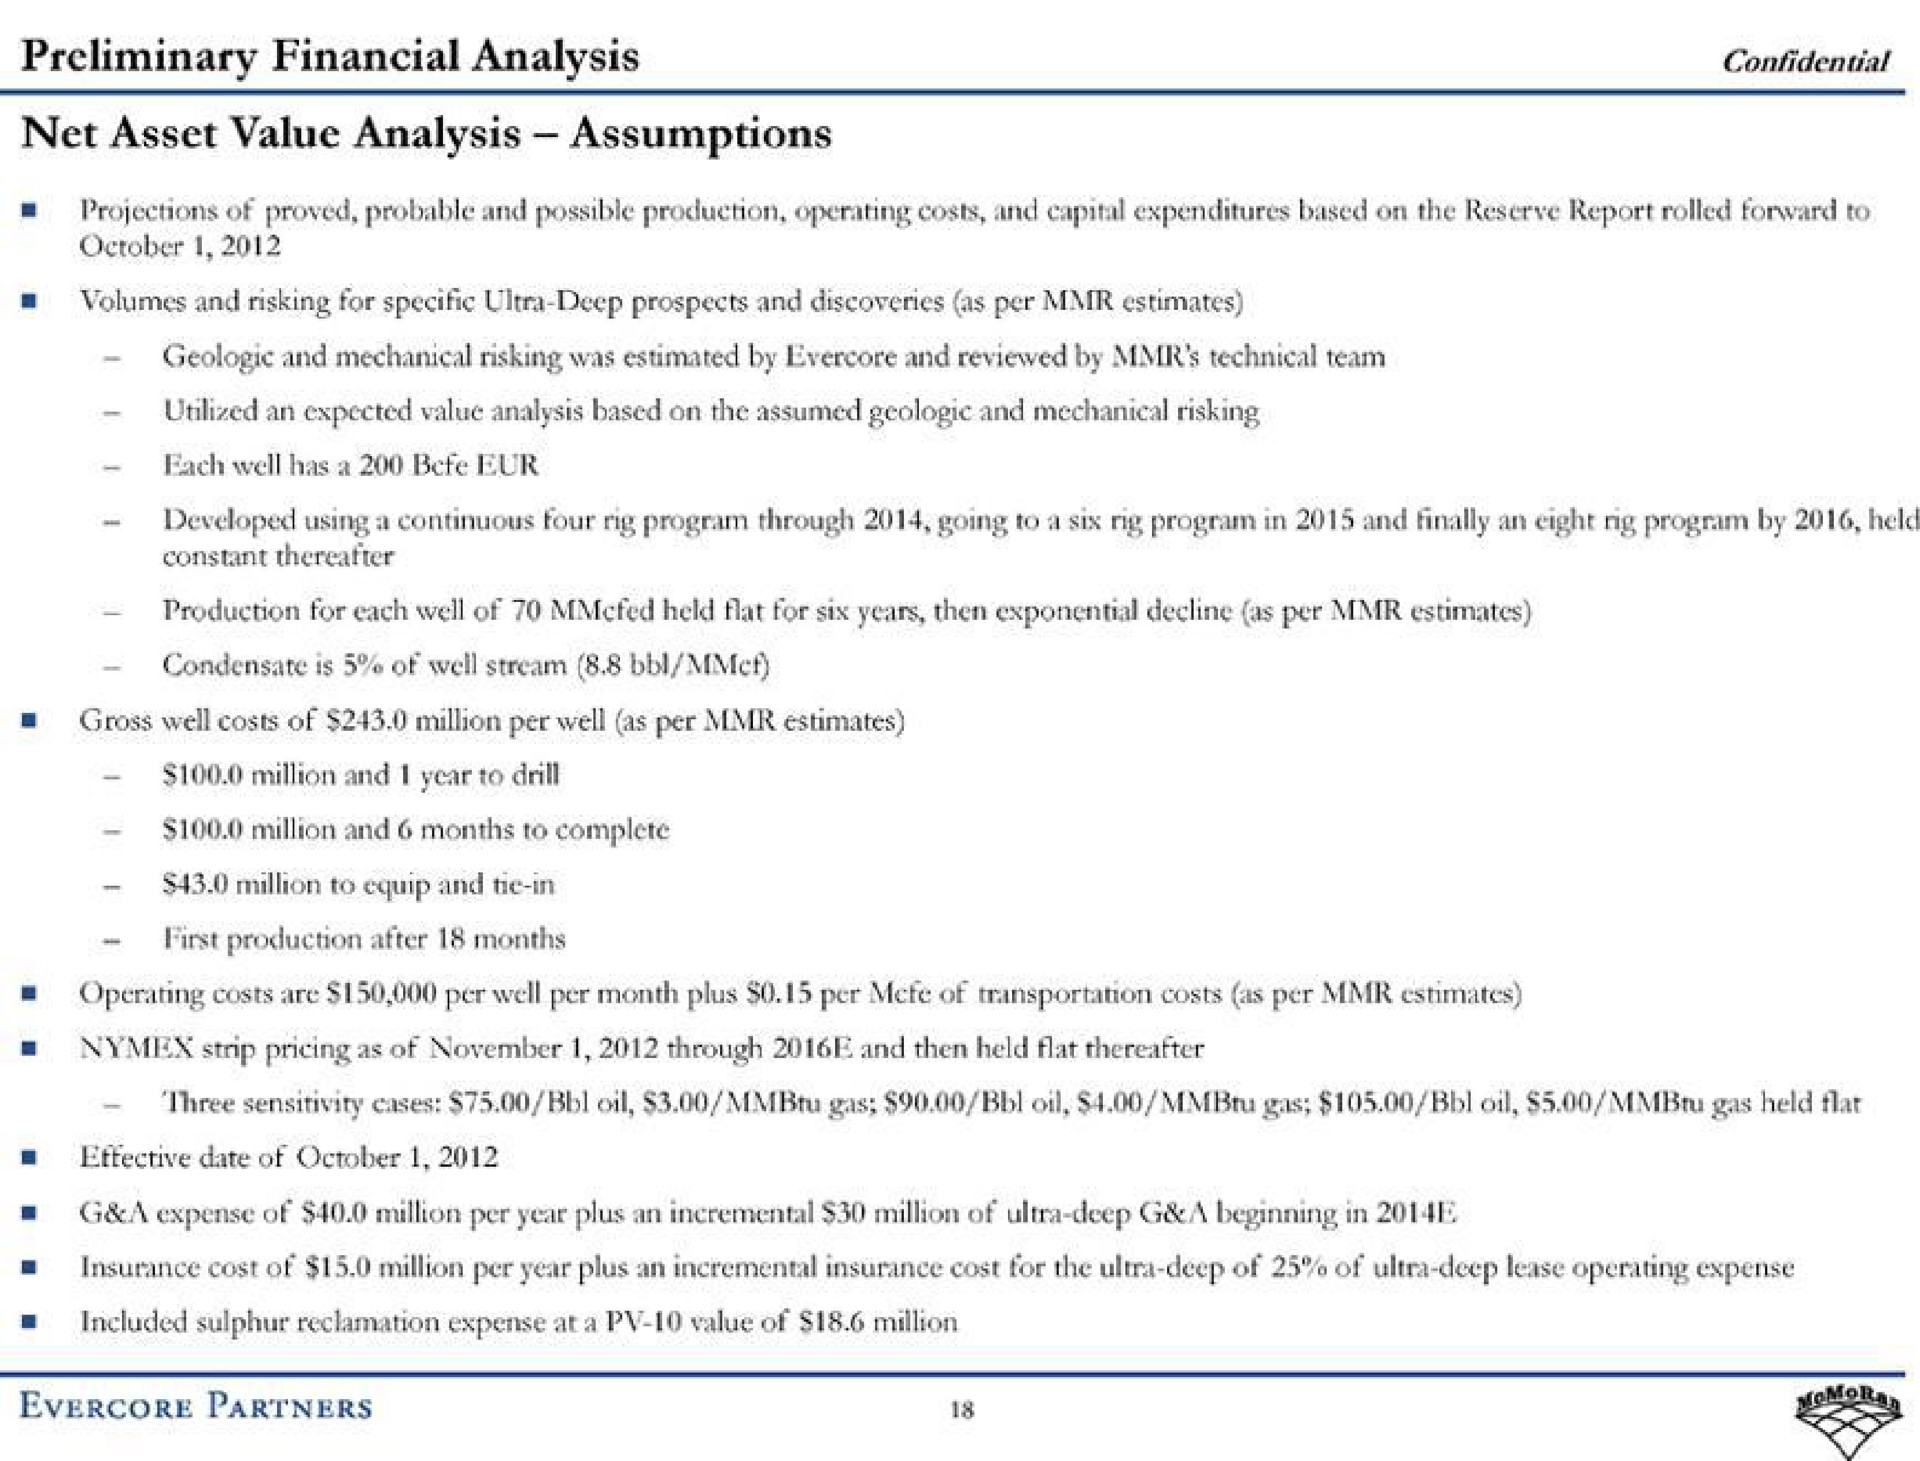 preliminary financial analysis net asset value analysis assumptions confidential partners | Evercore